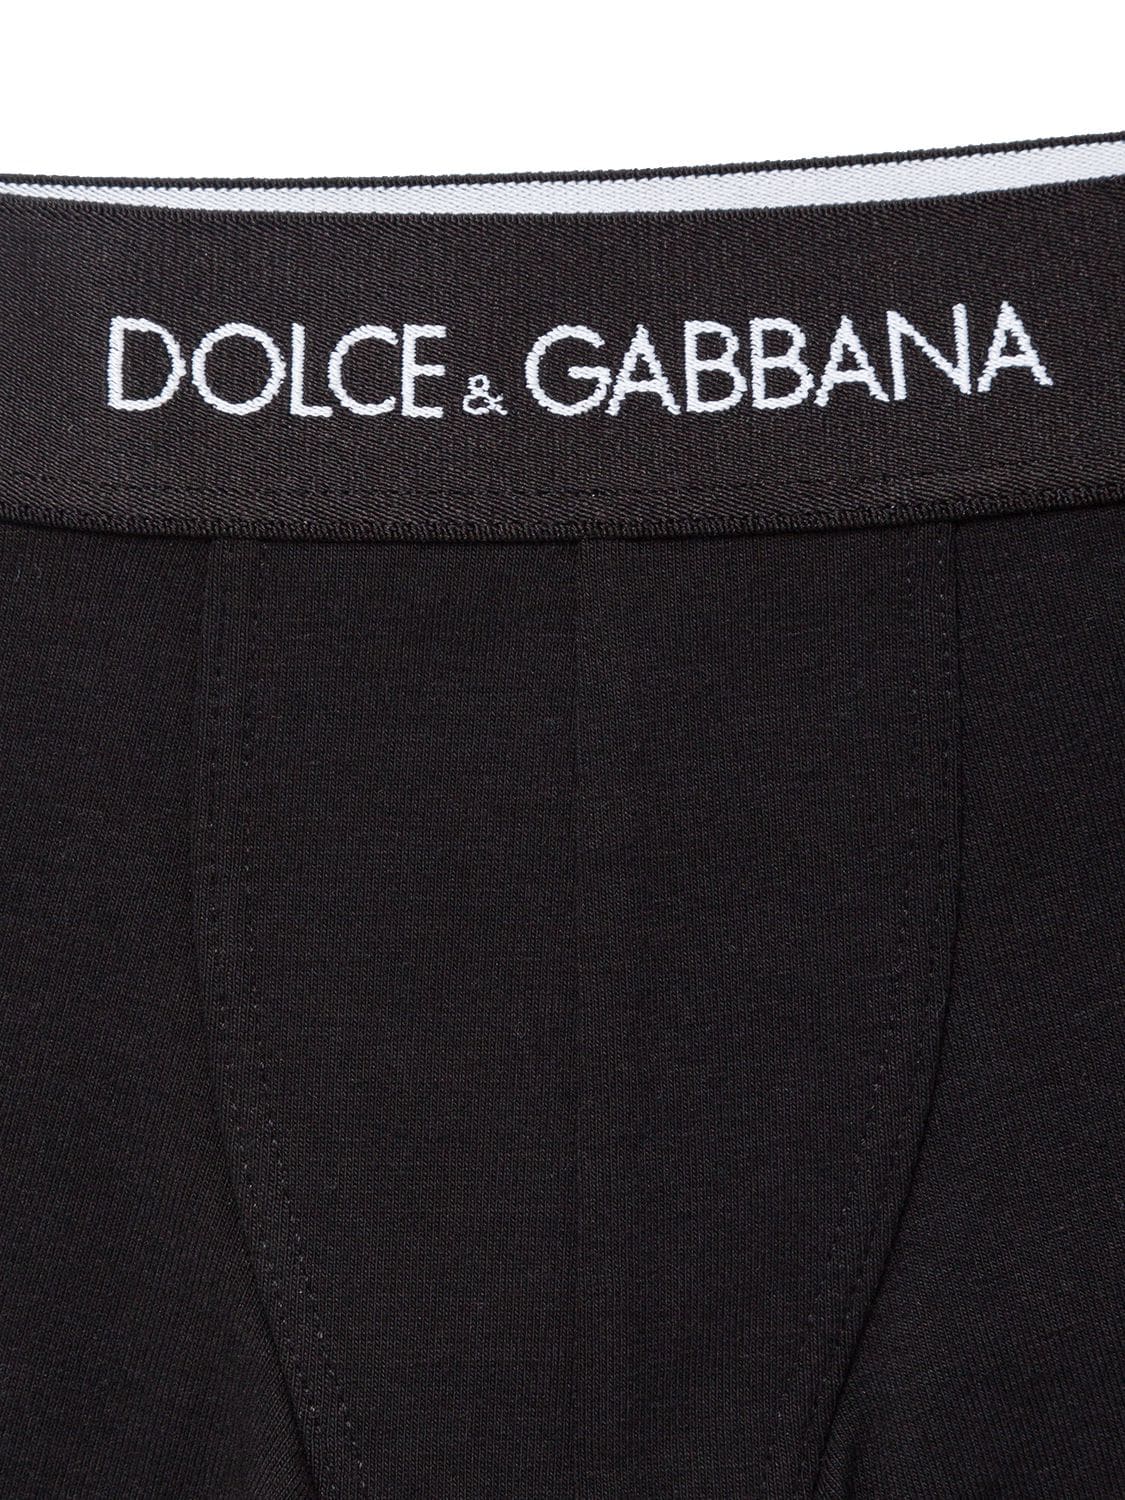 Shop Dolce & Gabbana Set Of 2 Cotton Logo Boxer Briefs In Black